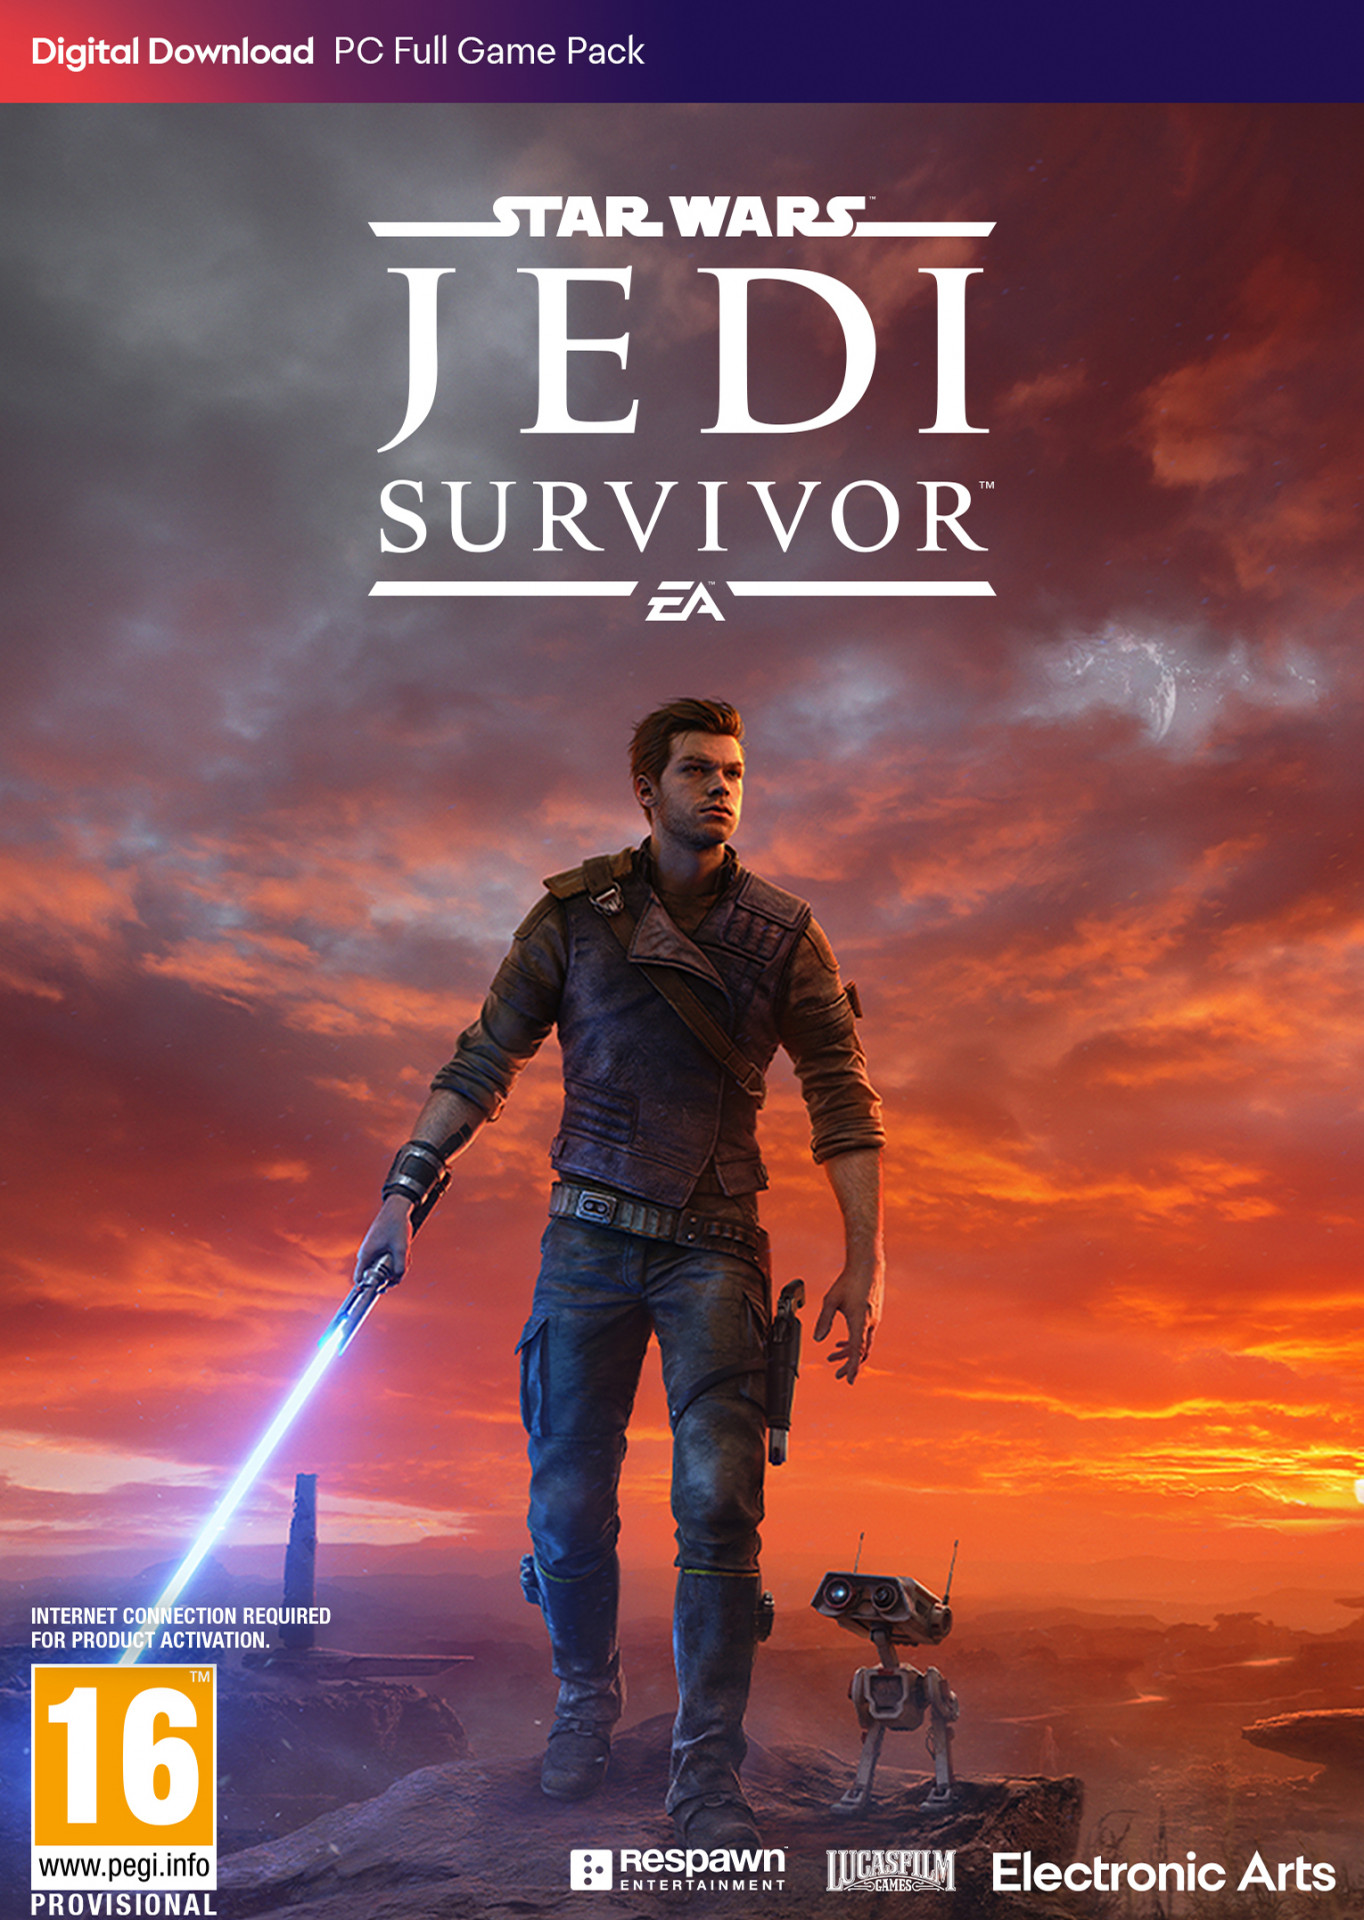 bevolking Fonkeling bewonderen Nedgame gameshop: Star Wars Jedi Survivor (PC Gaming) kopen